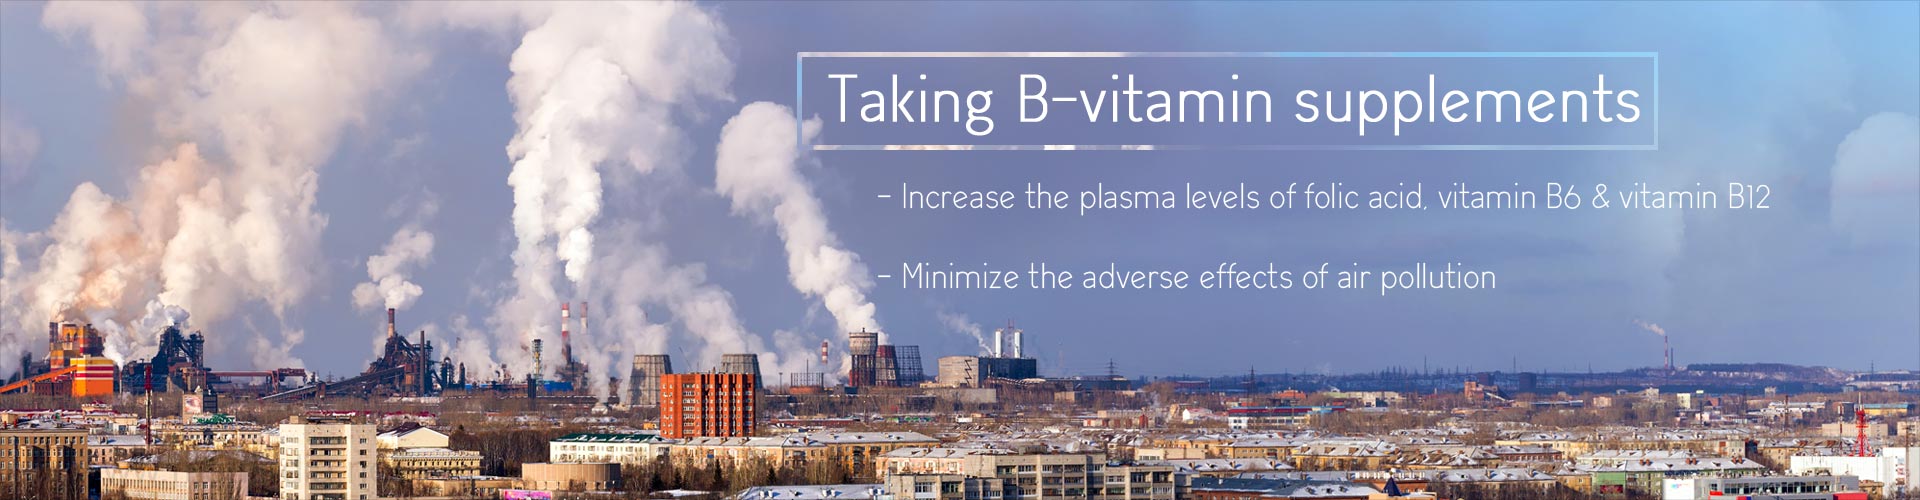 Taking B-vitamin supplements
- Increase the plasma levels of folic acid, vitamin B6 & vitamin B12
- Minimize the adverse effects of air pollution